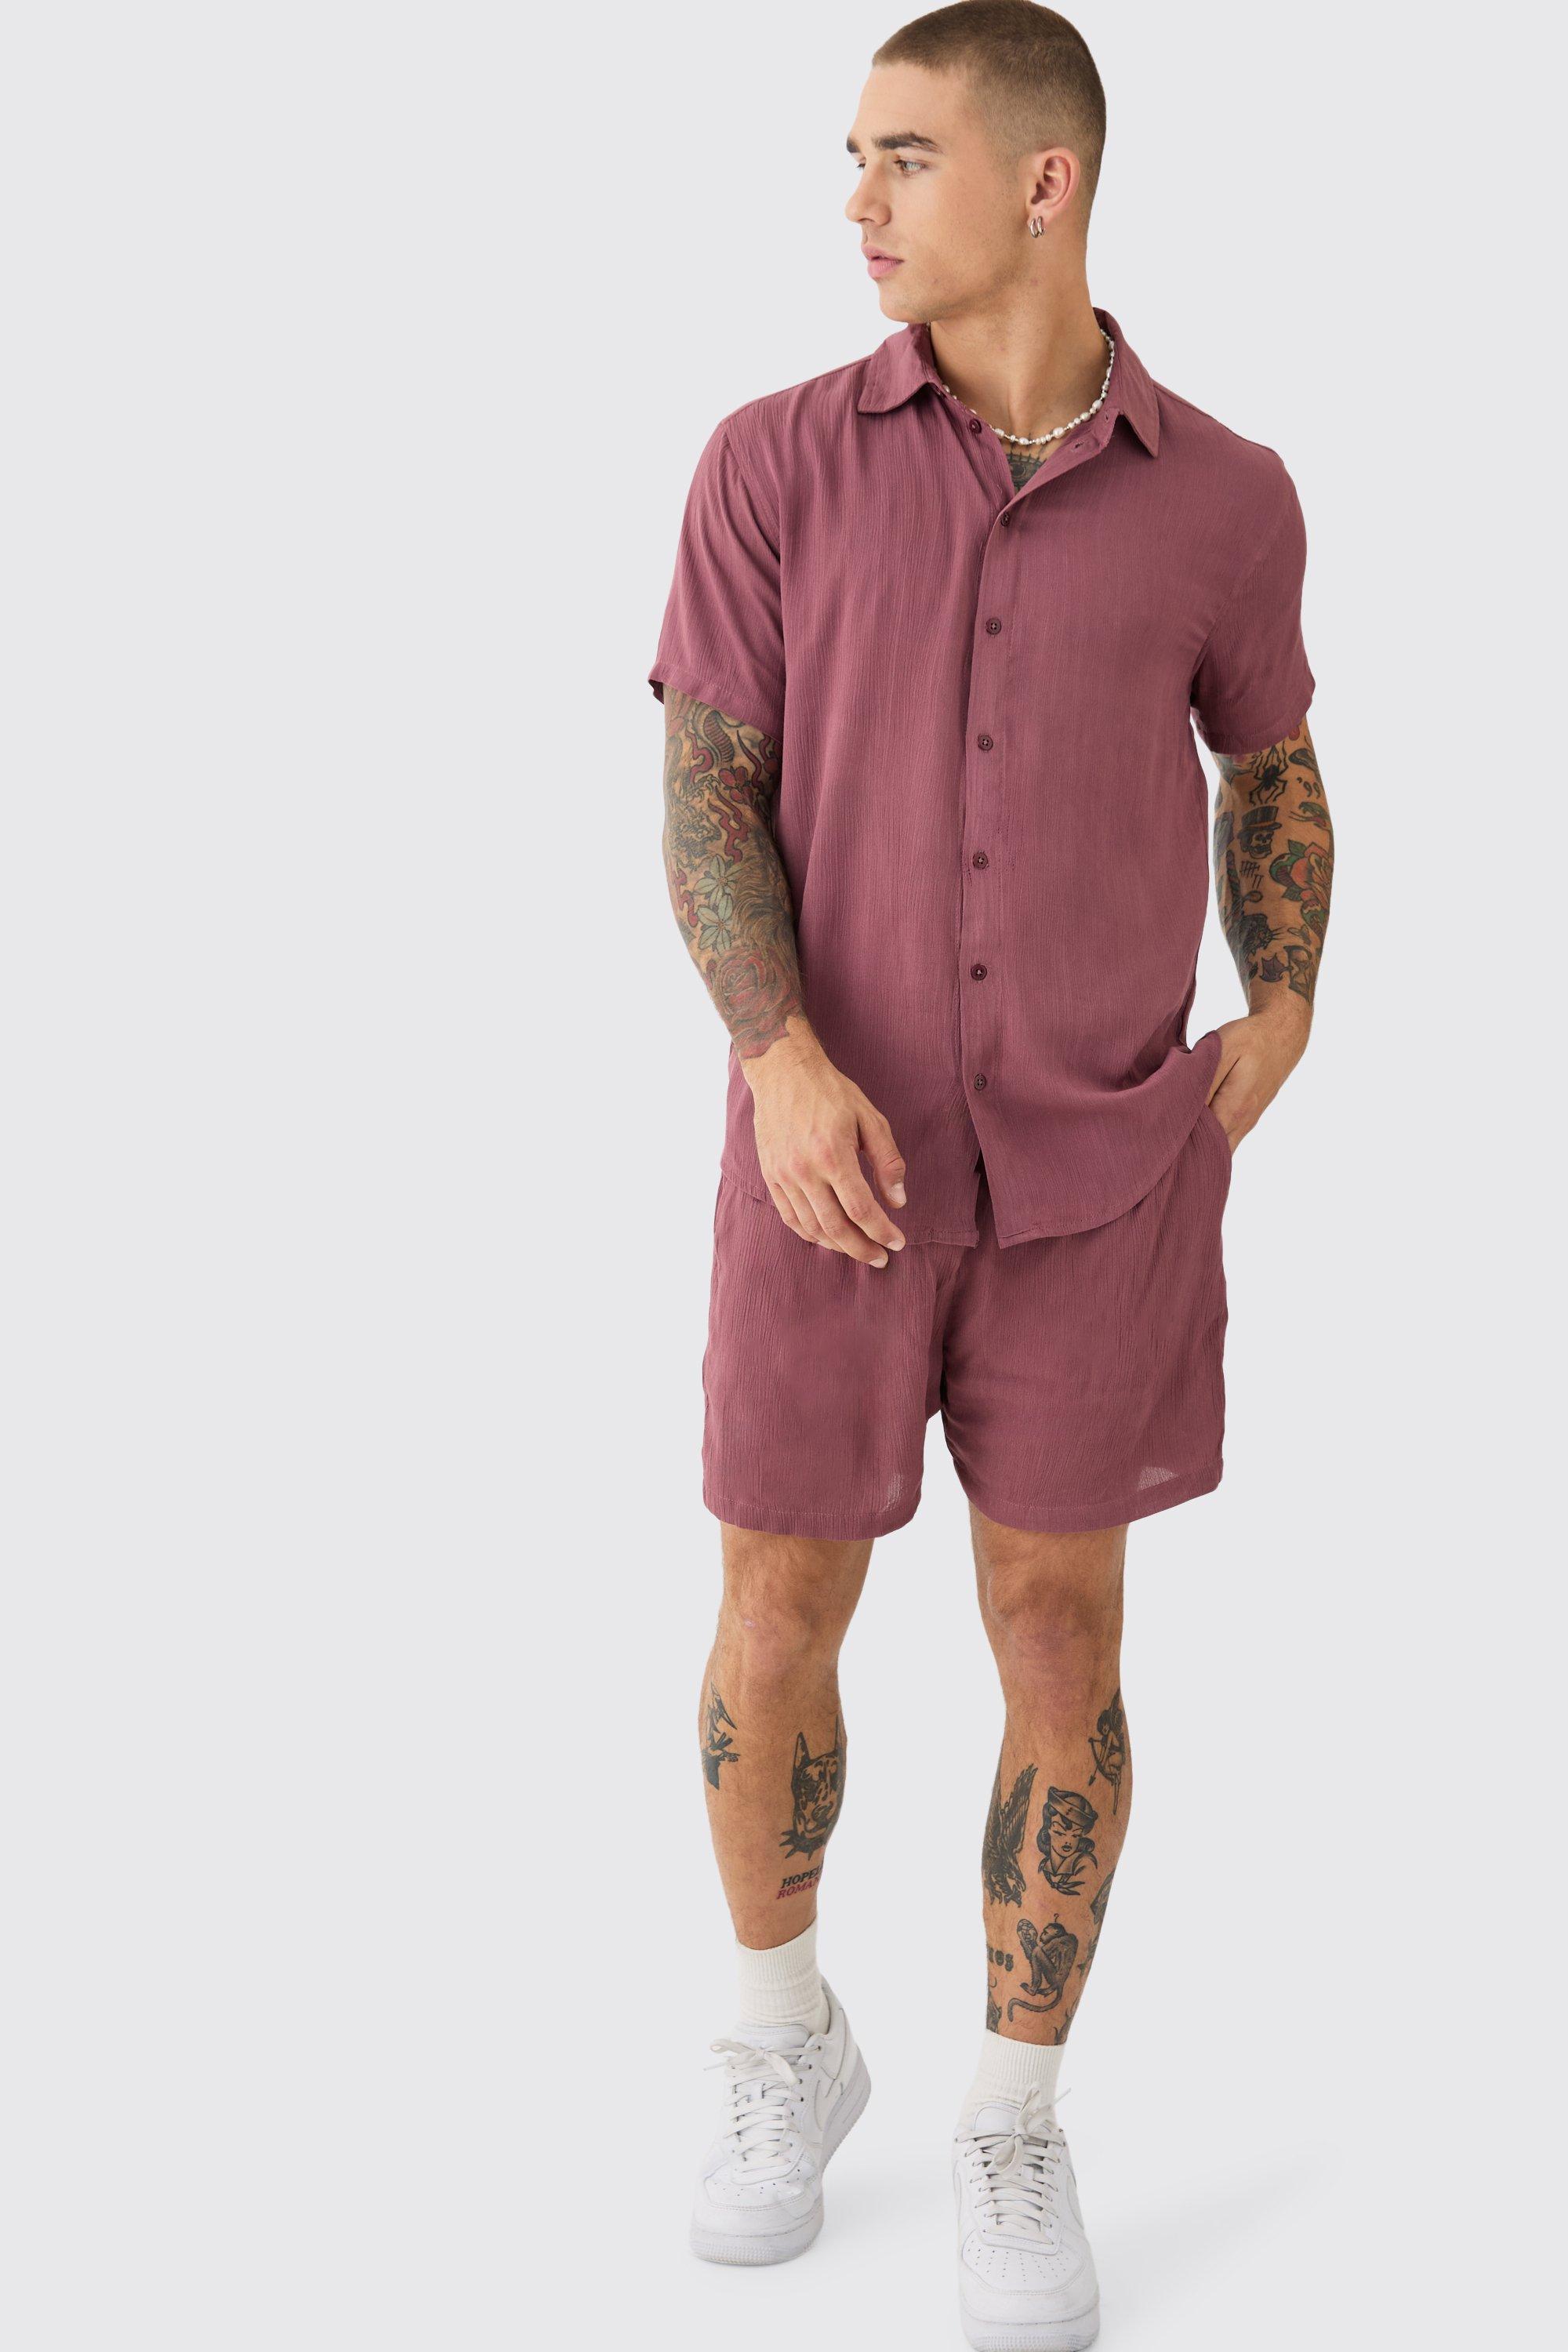 Image of Short Sleeve Cheese Cloth Shirt And Short Set, Purple